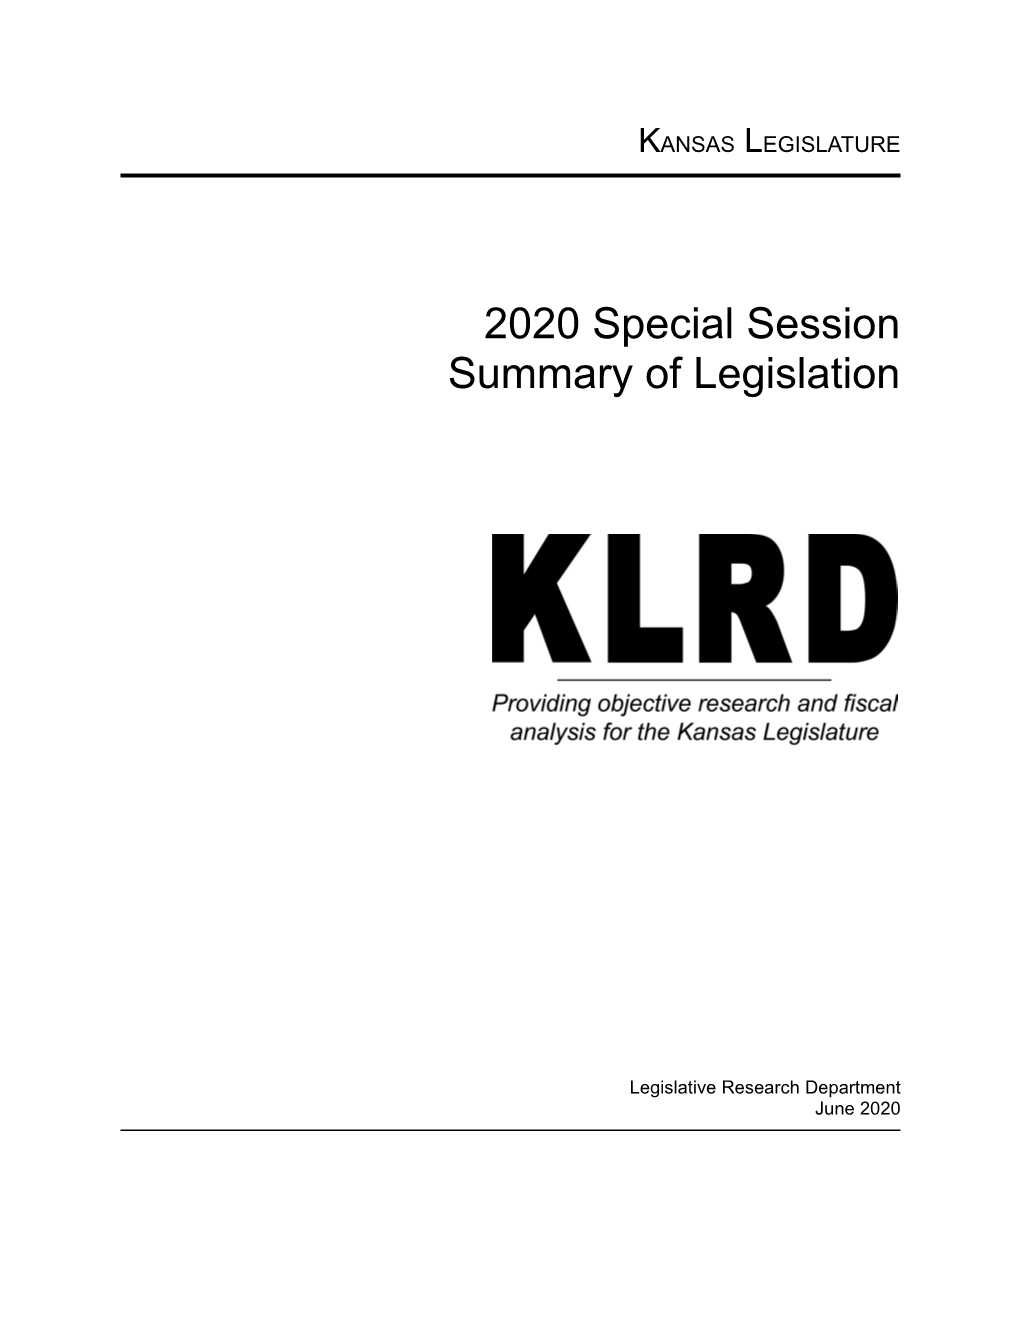 2020 Special Session Summary of Legislation